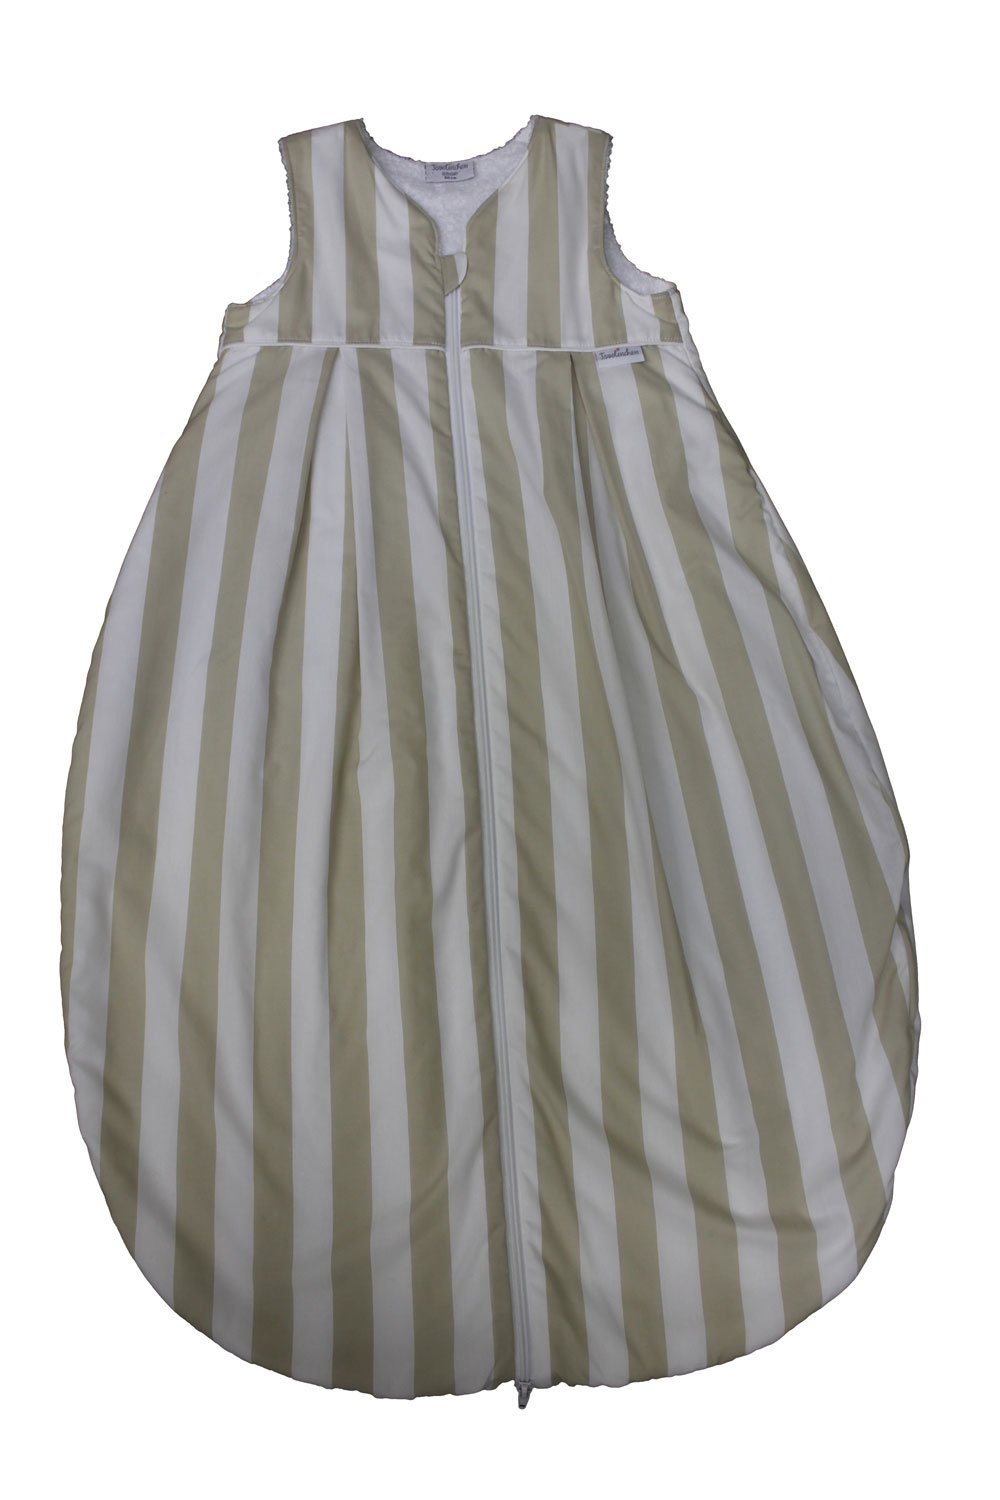 Tavolinchen 35/105-129-110 Terry Cloth Sleeping Bag Block Stripes Size 110 cm Beige